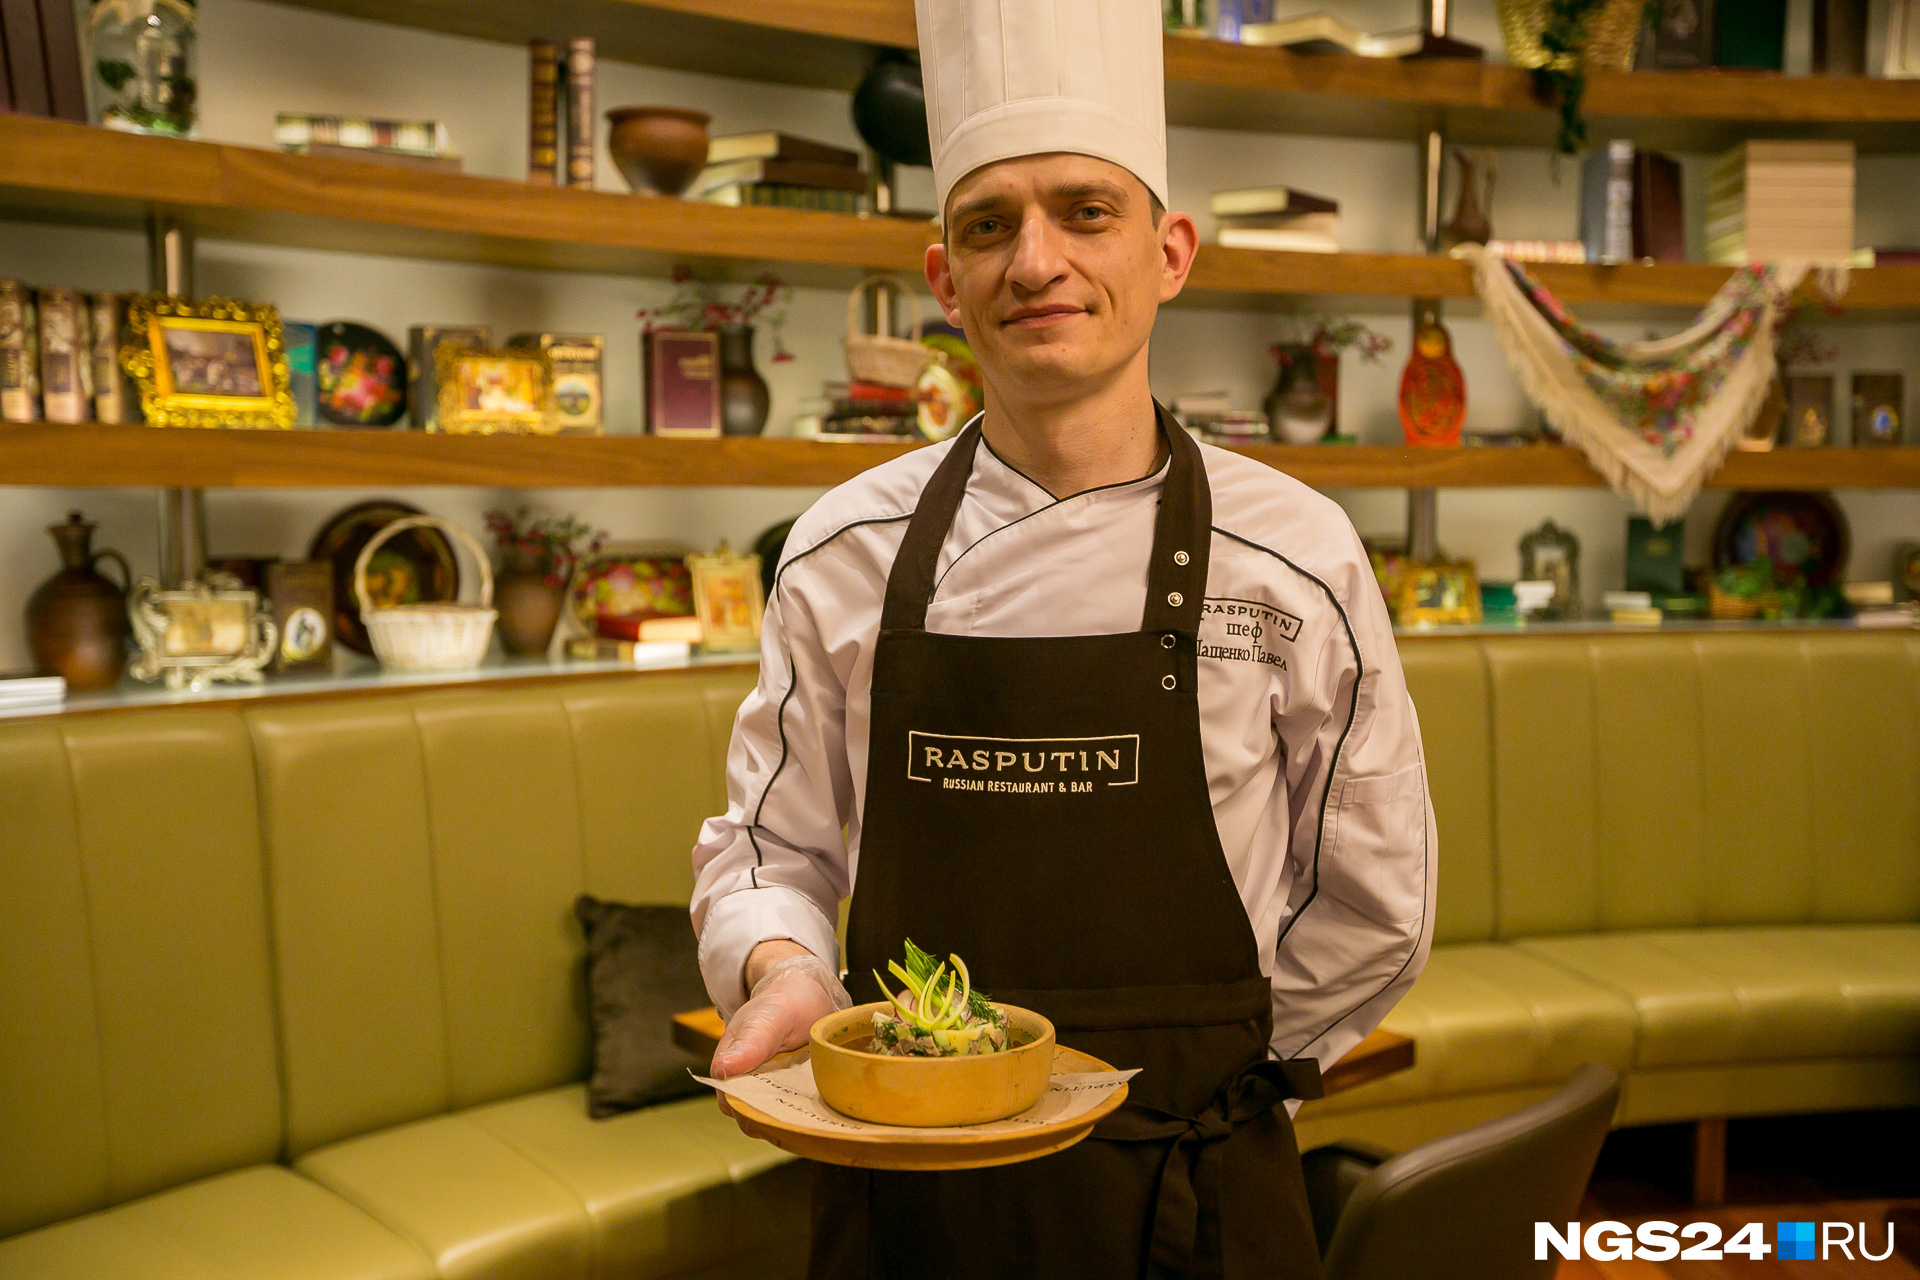 Автор рецепта — шеф-повар ресторана «Распутин» Павел Пащенко